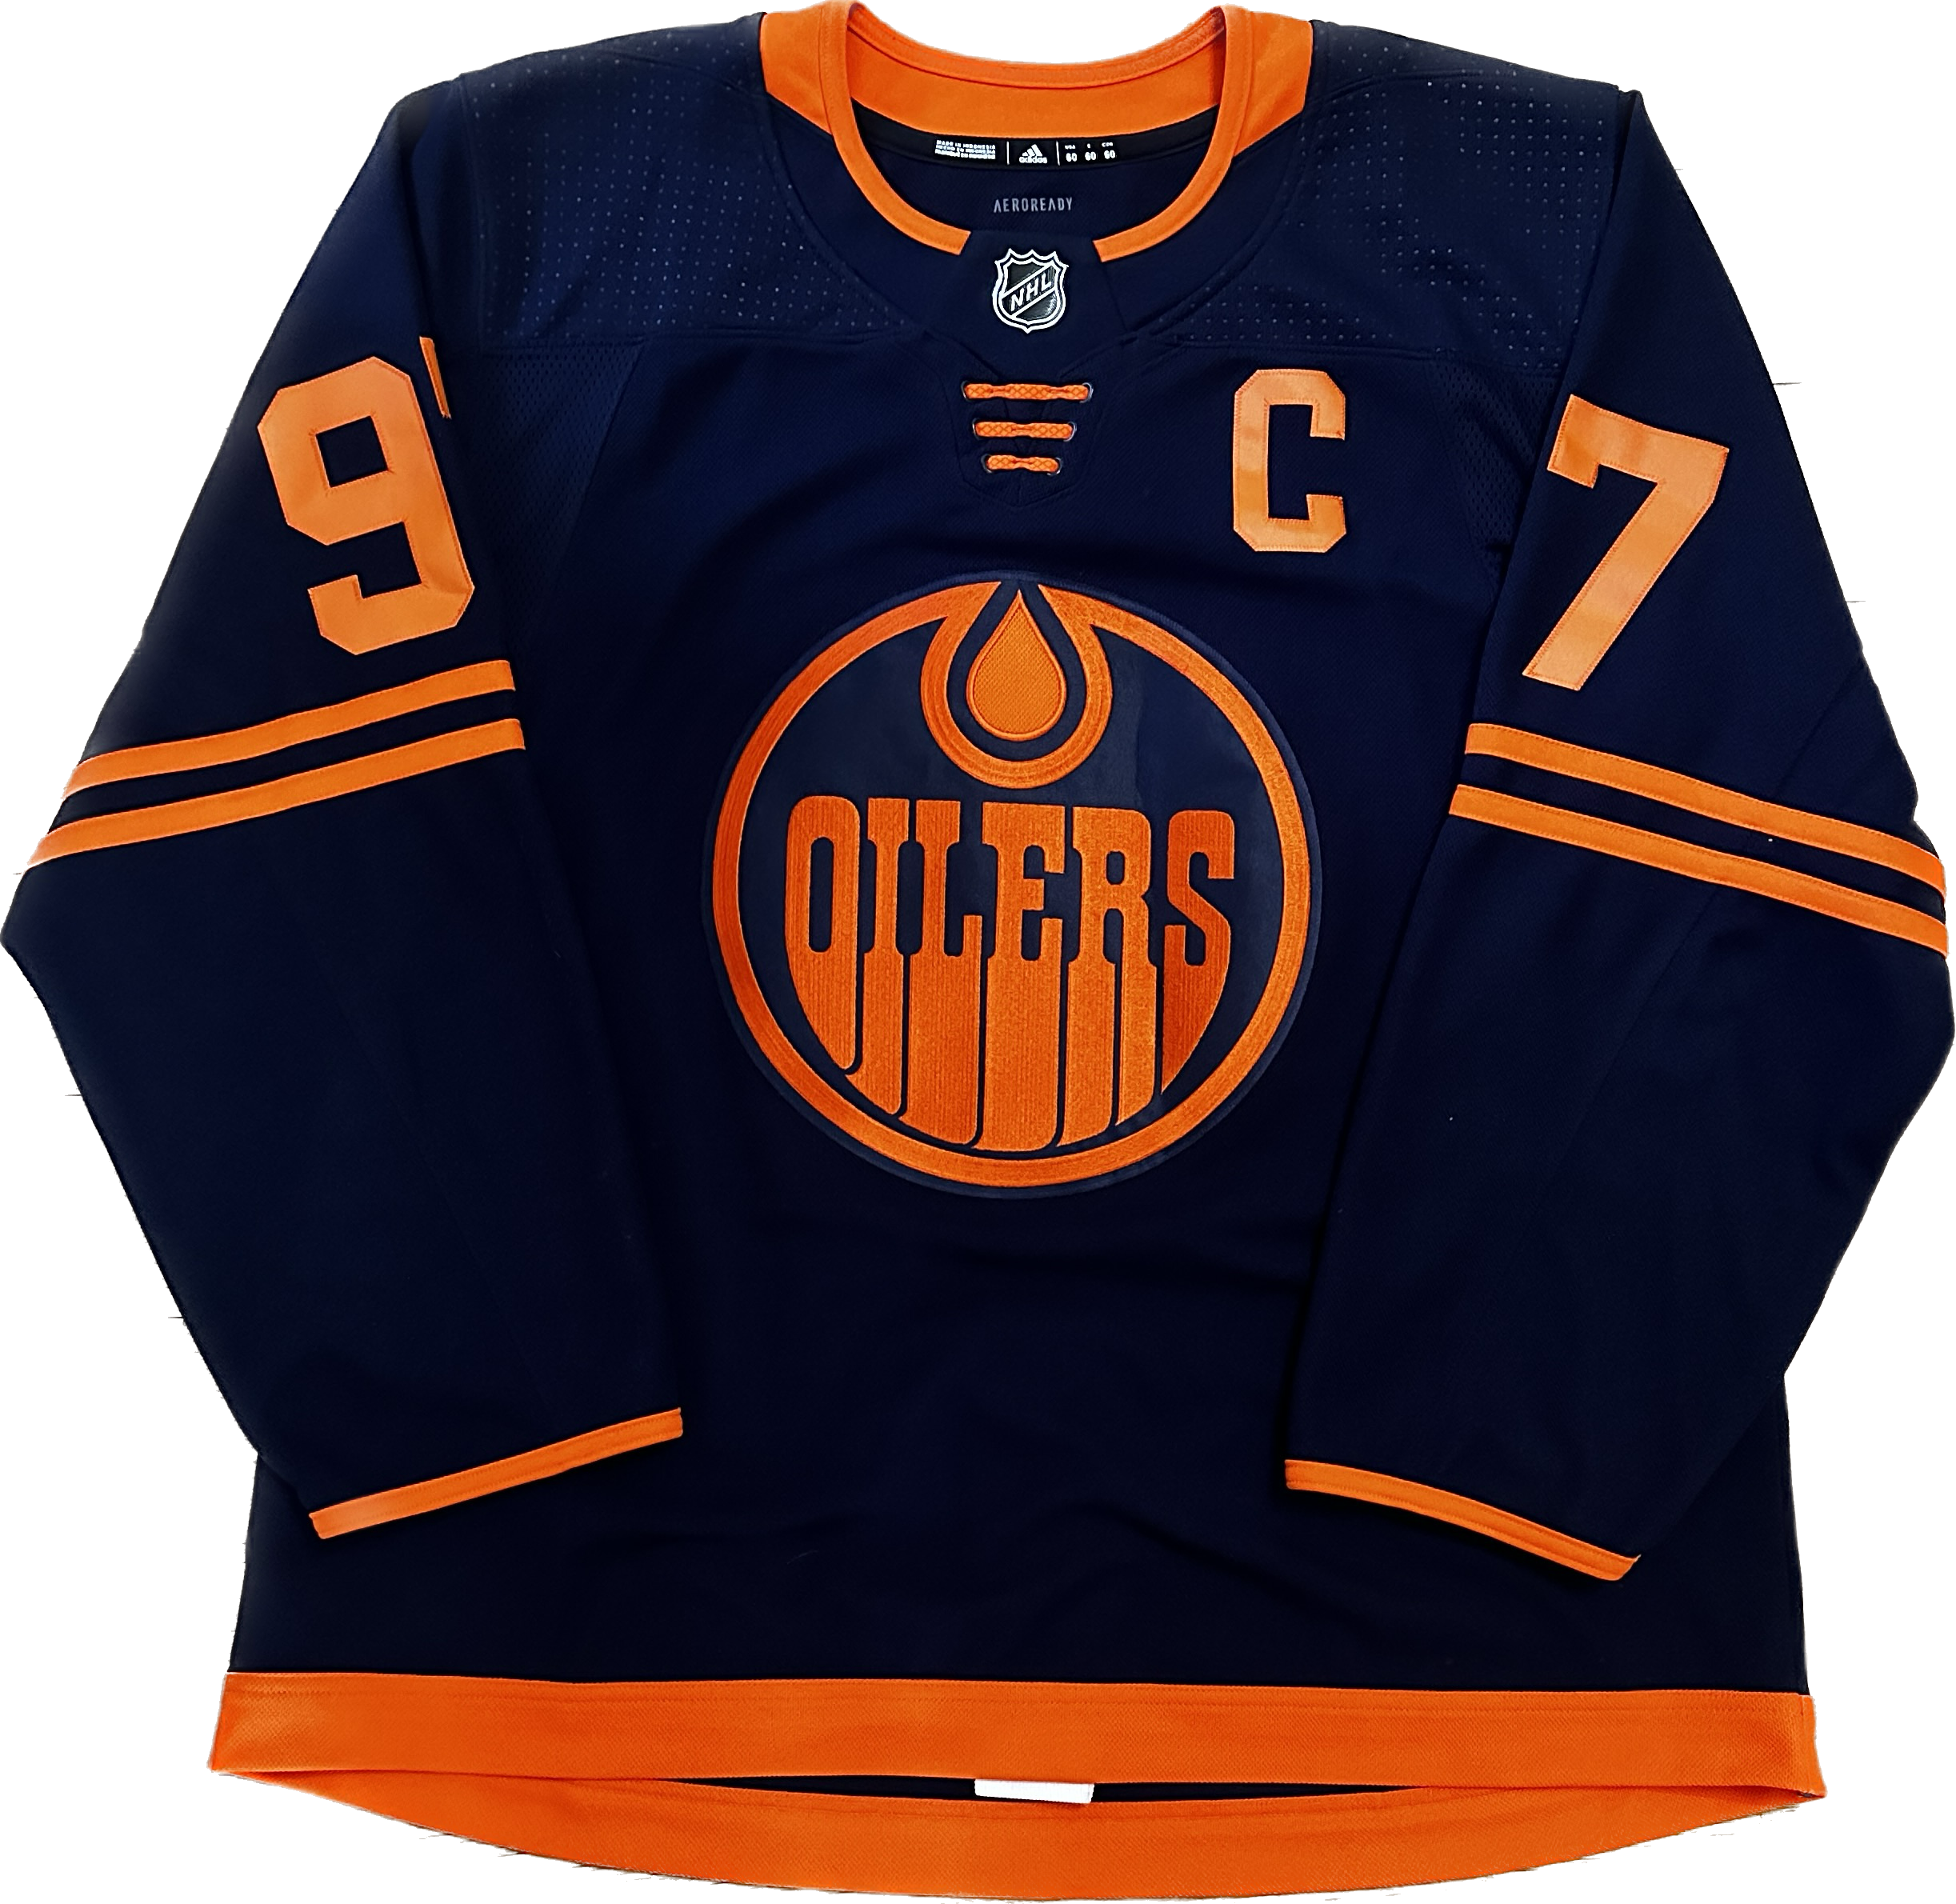 Edmonton Oilers NHL Hockey Jersey (60)